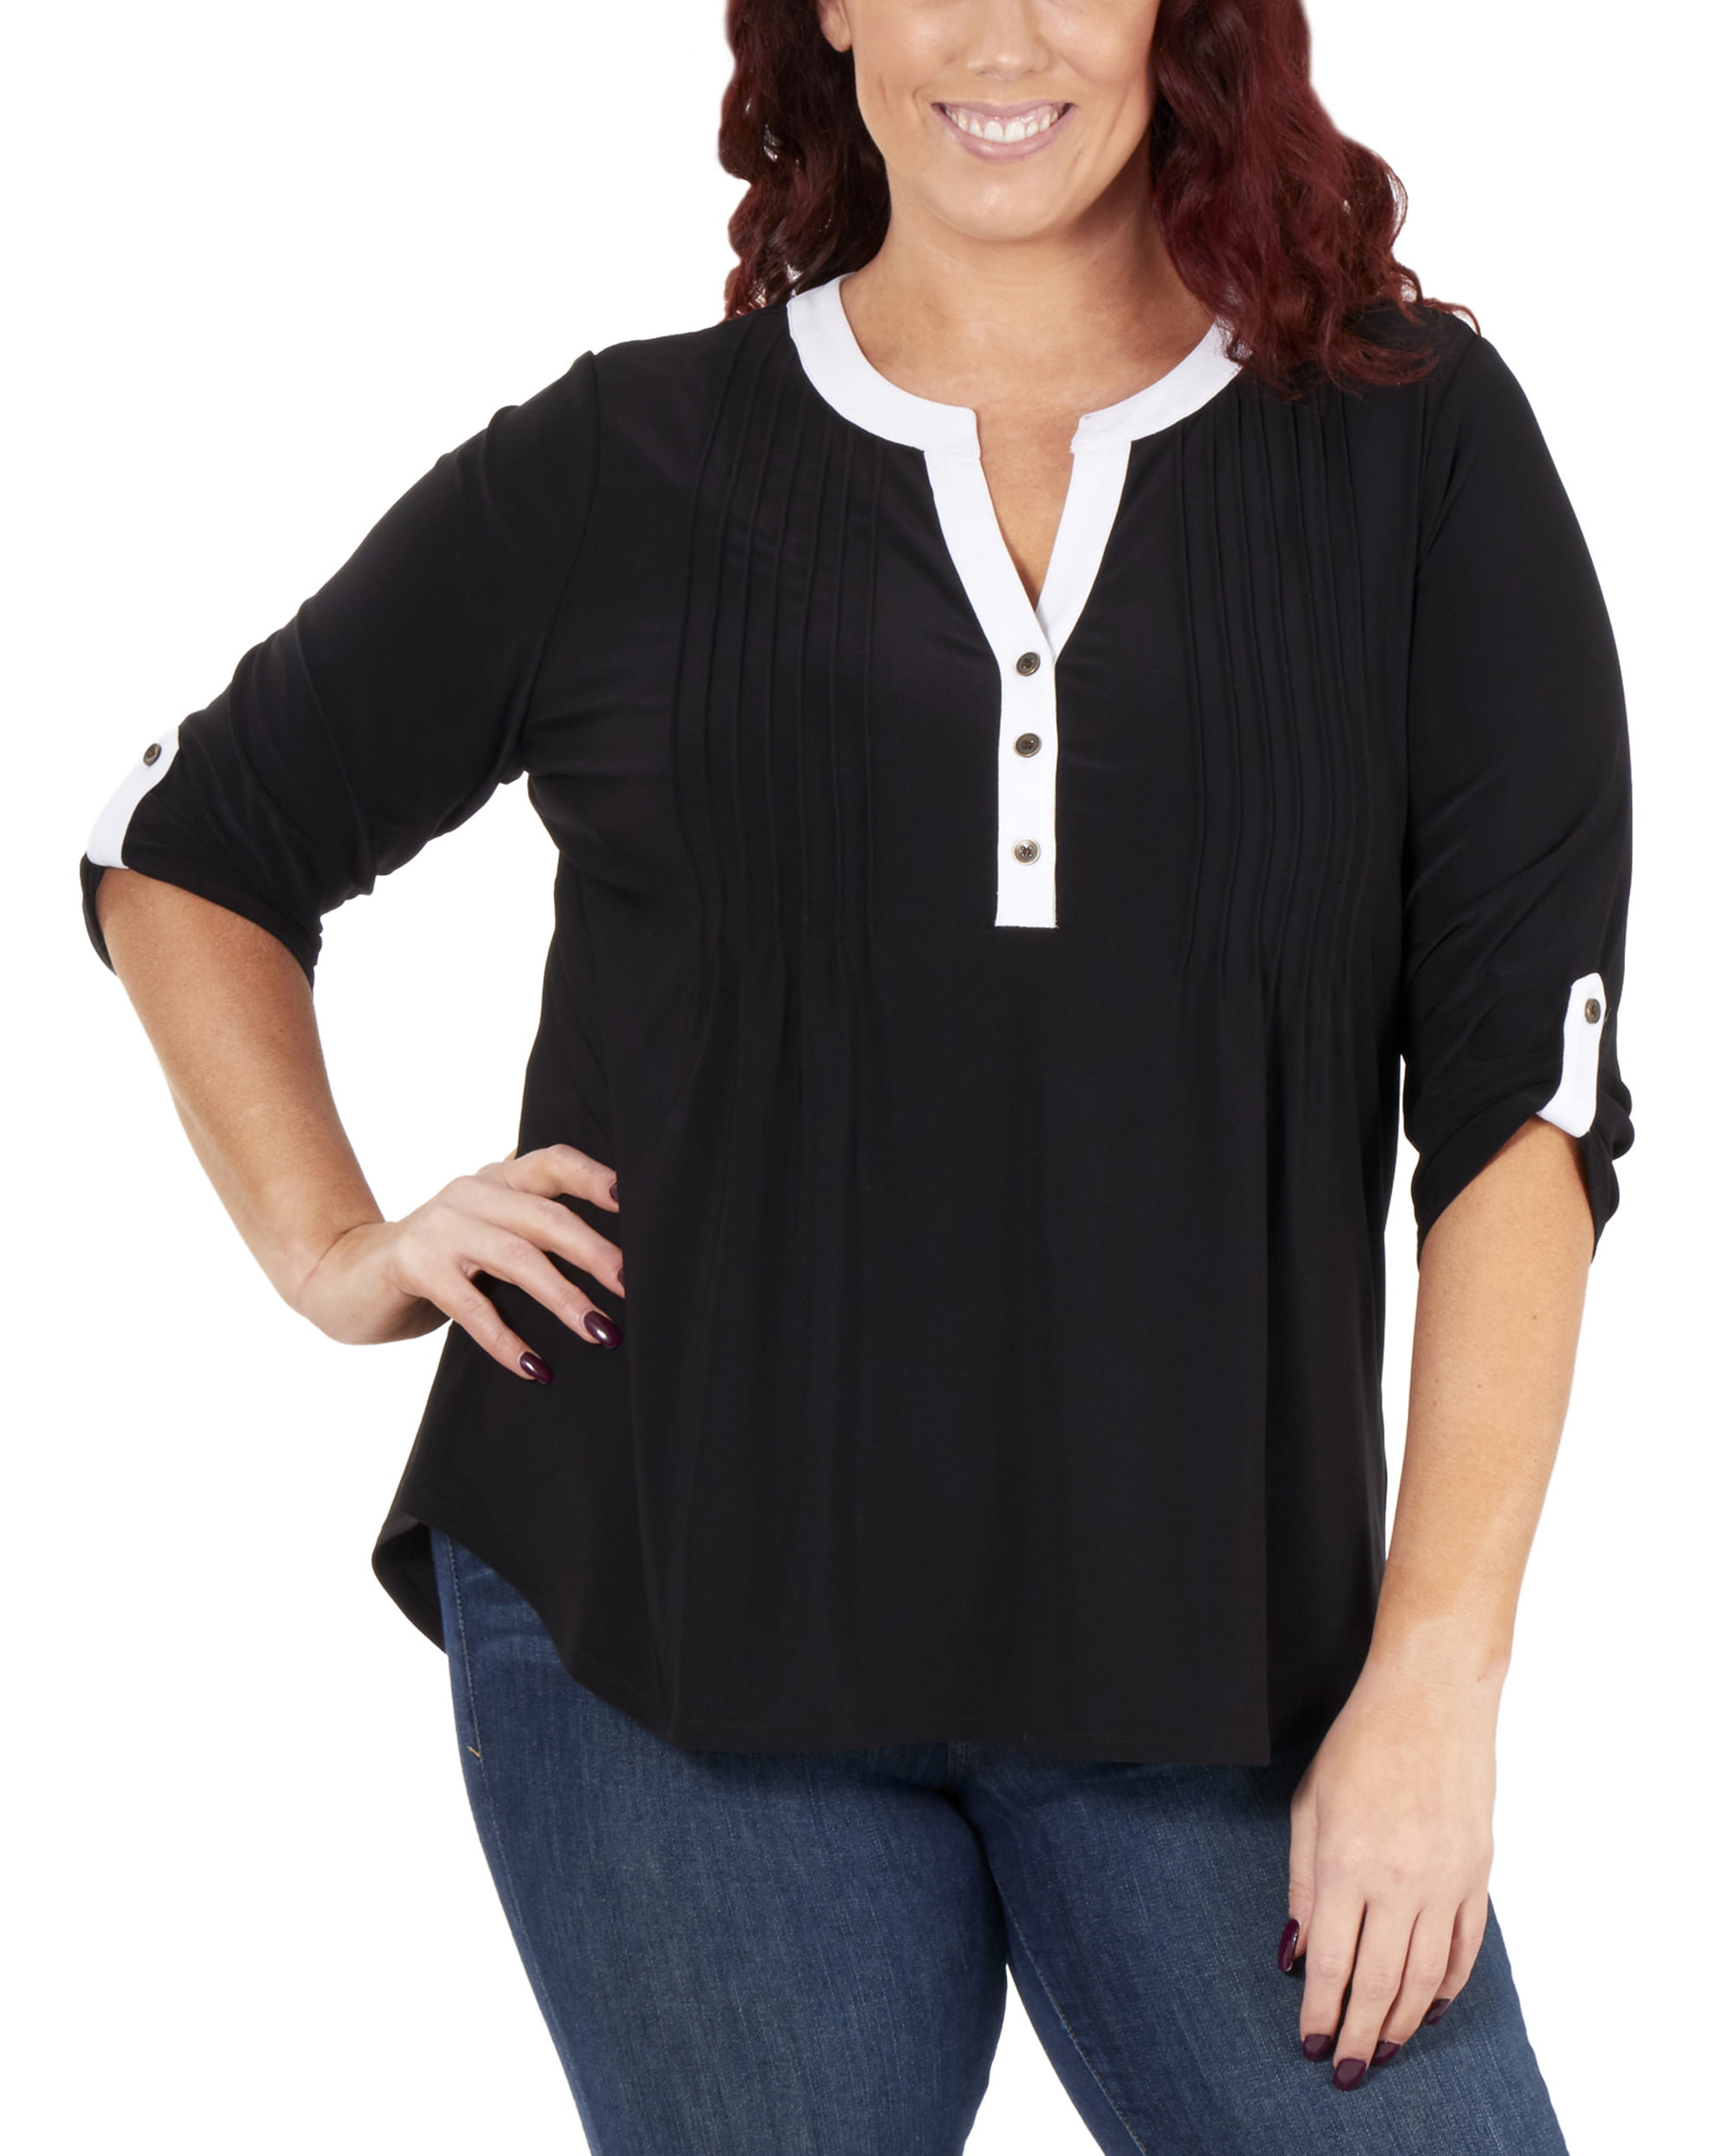 Lovor Woman Plus Size Tops Shirt Women Button Short Sleeve Fashoin Hot Drill Blouse Womens Shirts Summer 2019 